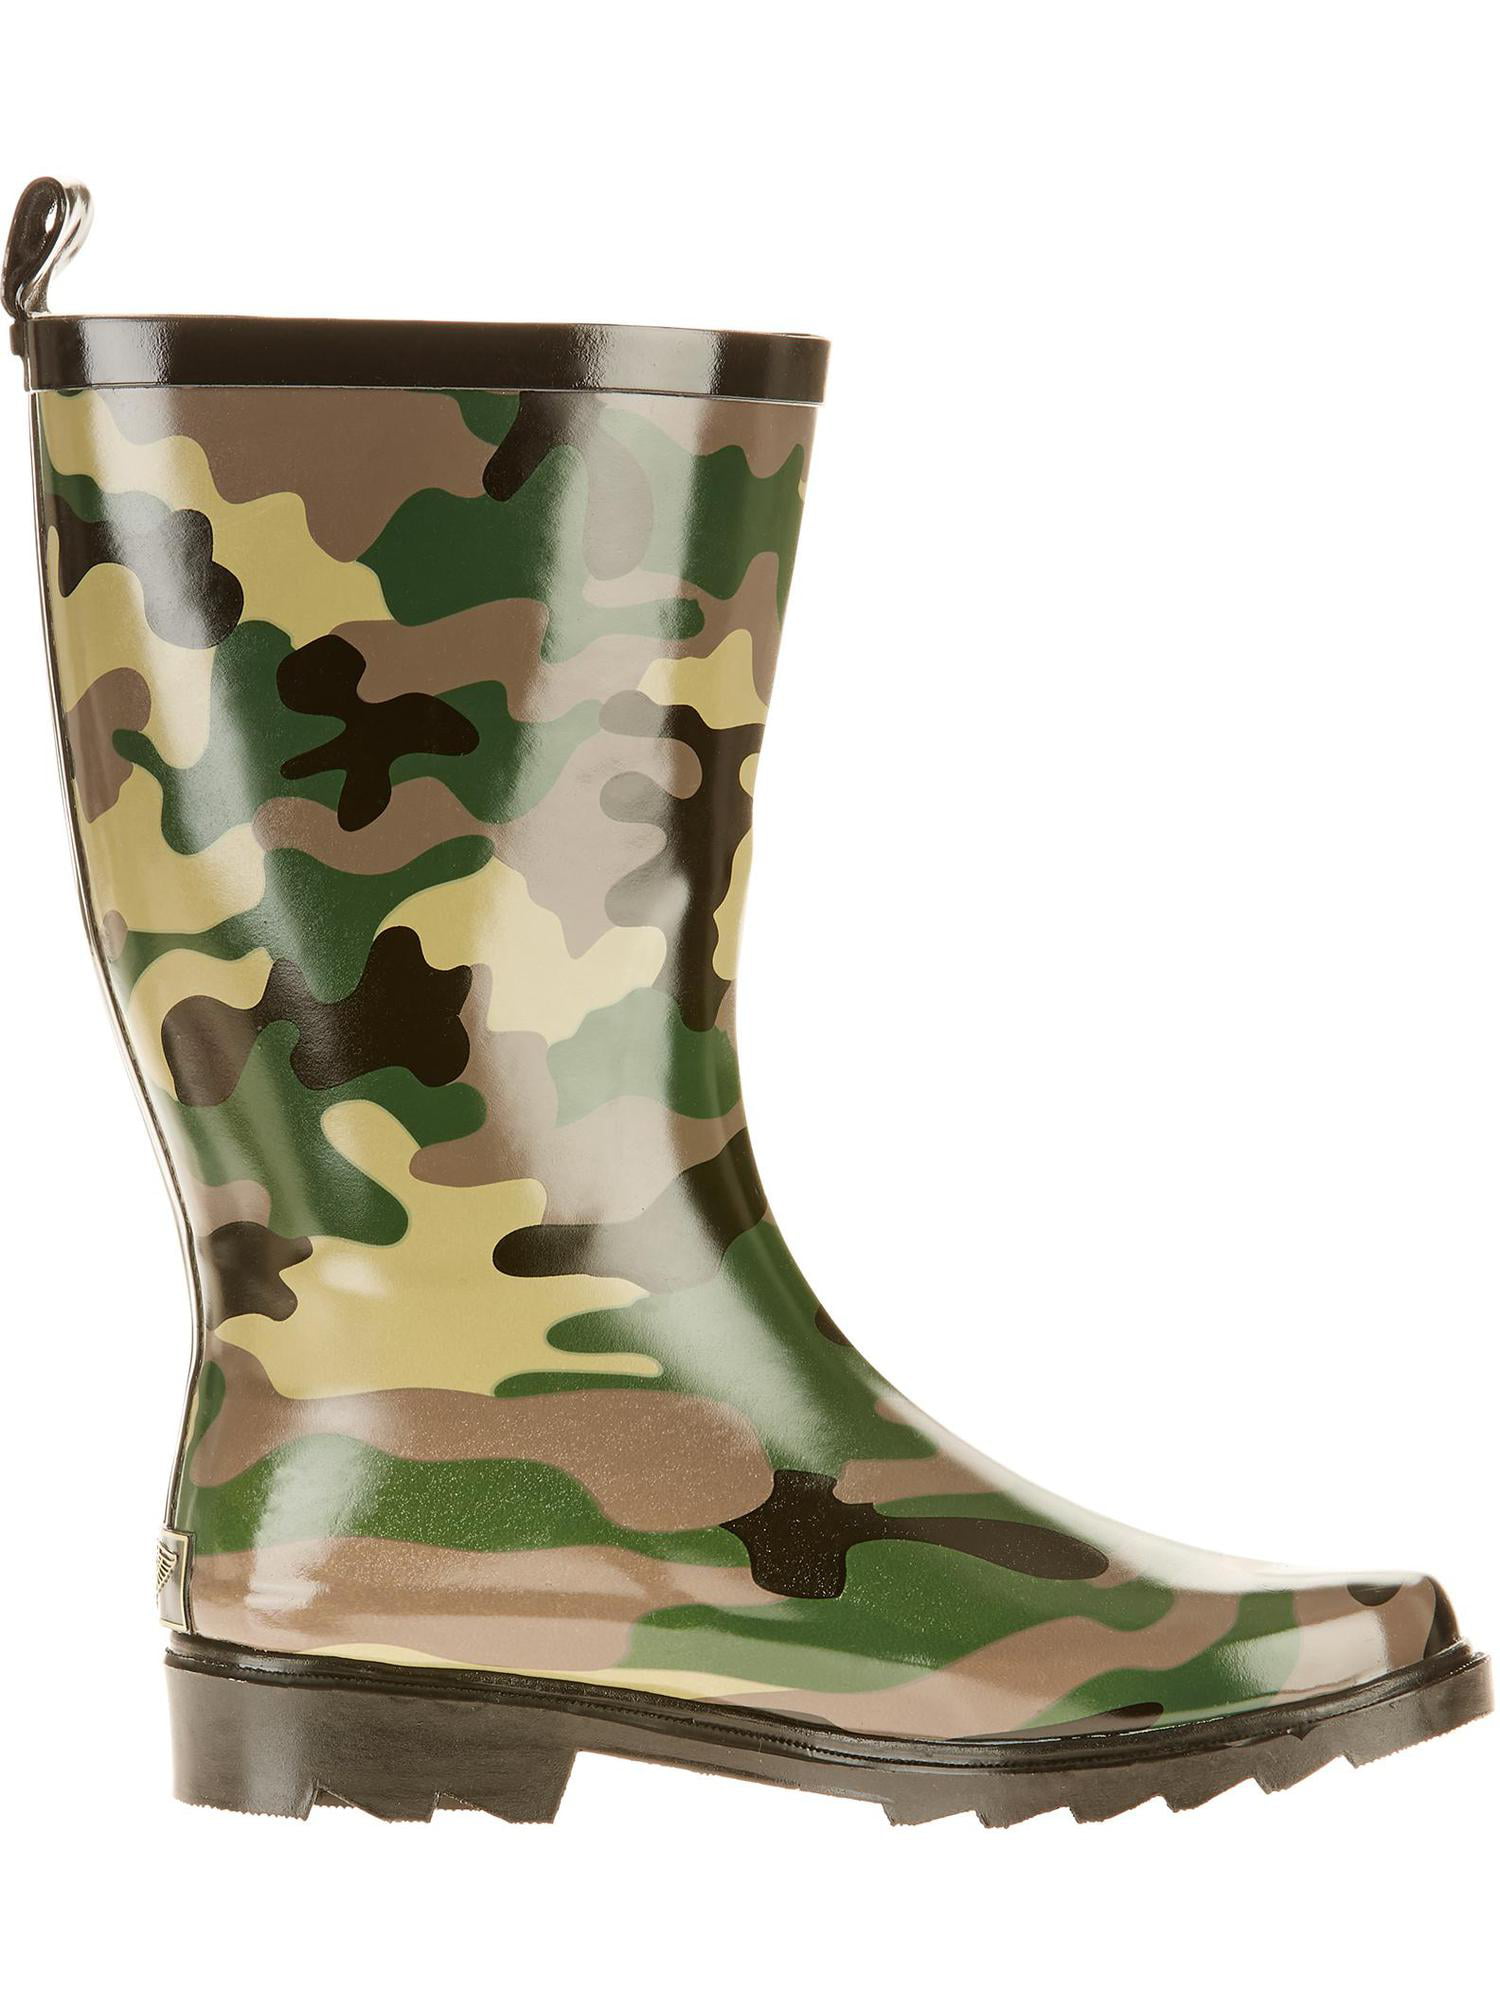 Kids Boys Wellington Boots Wellies Rainy Boots Camouflage Camo All sizes 